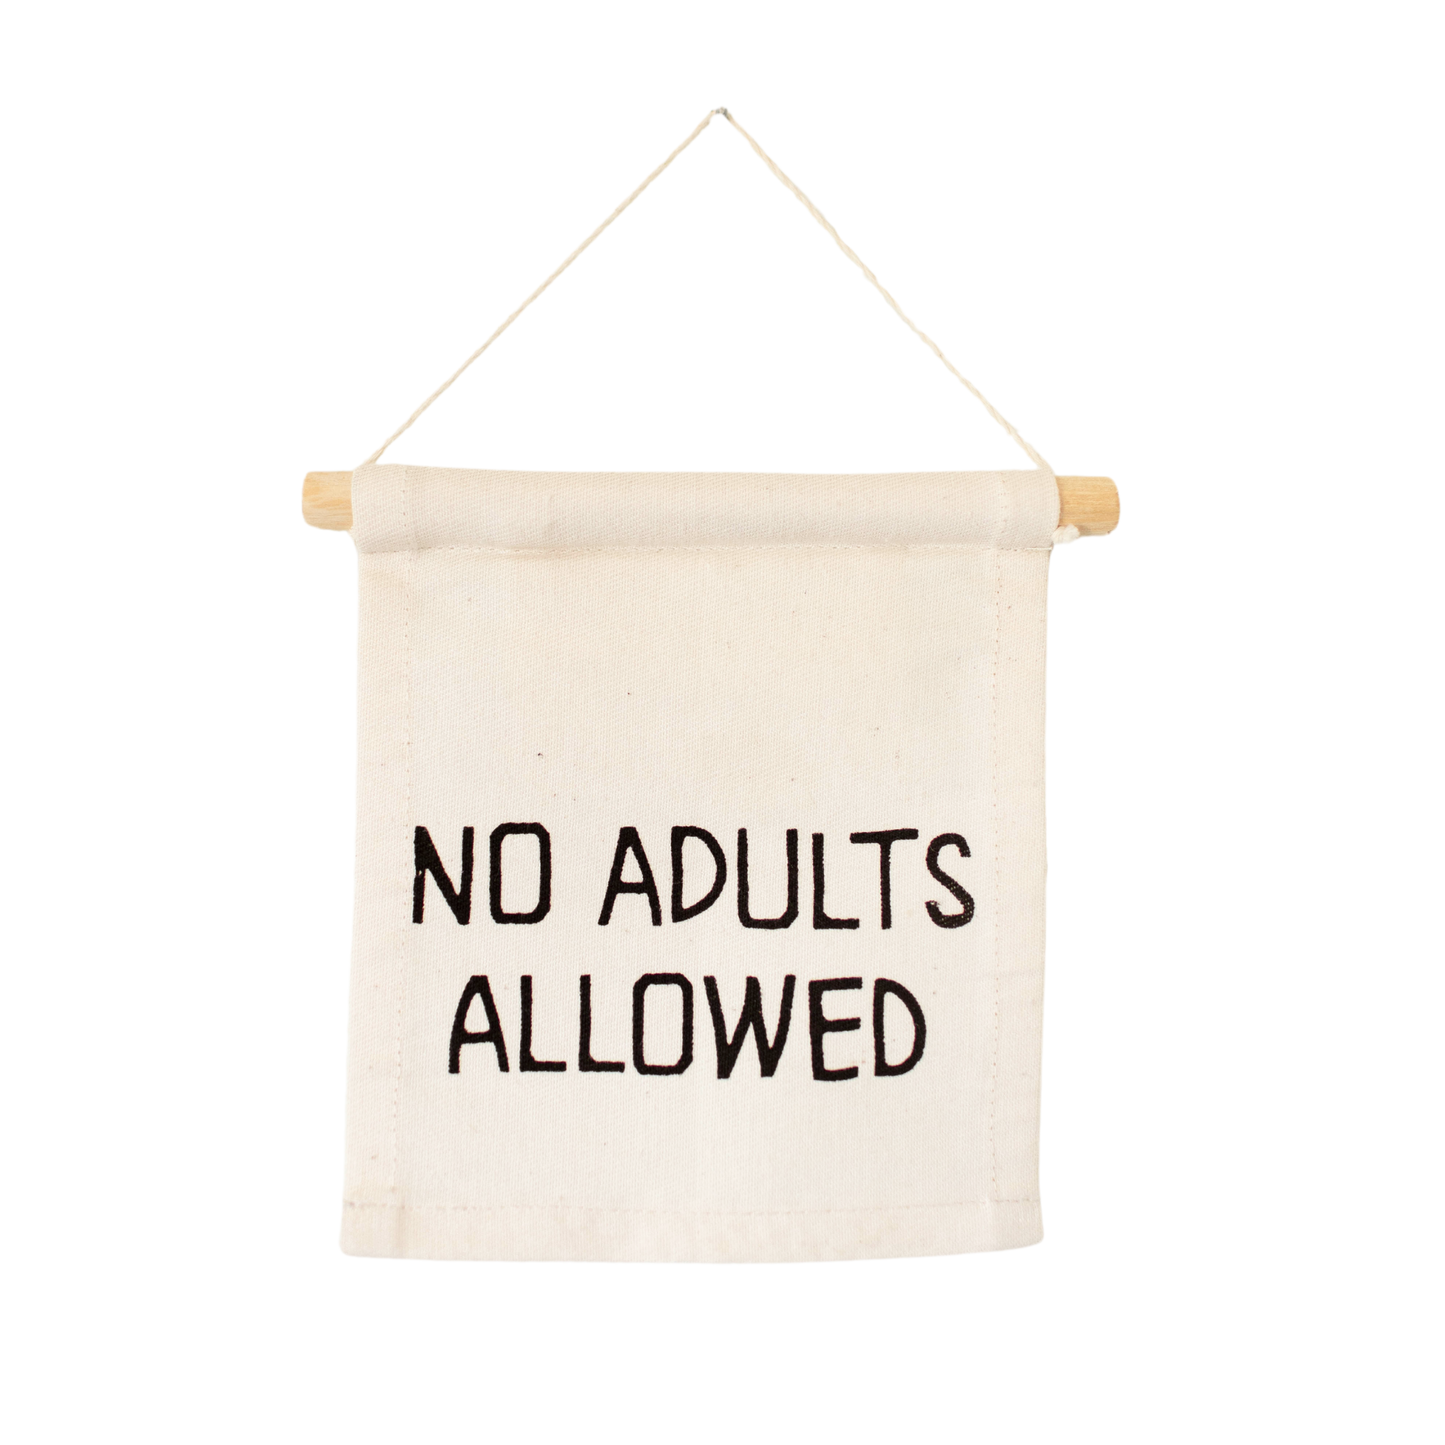 No adults allowed hang sign